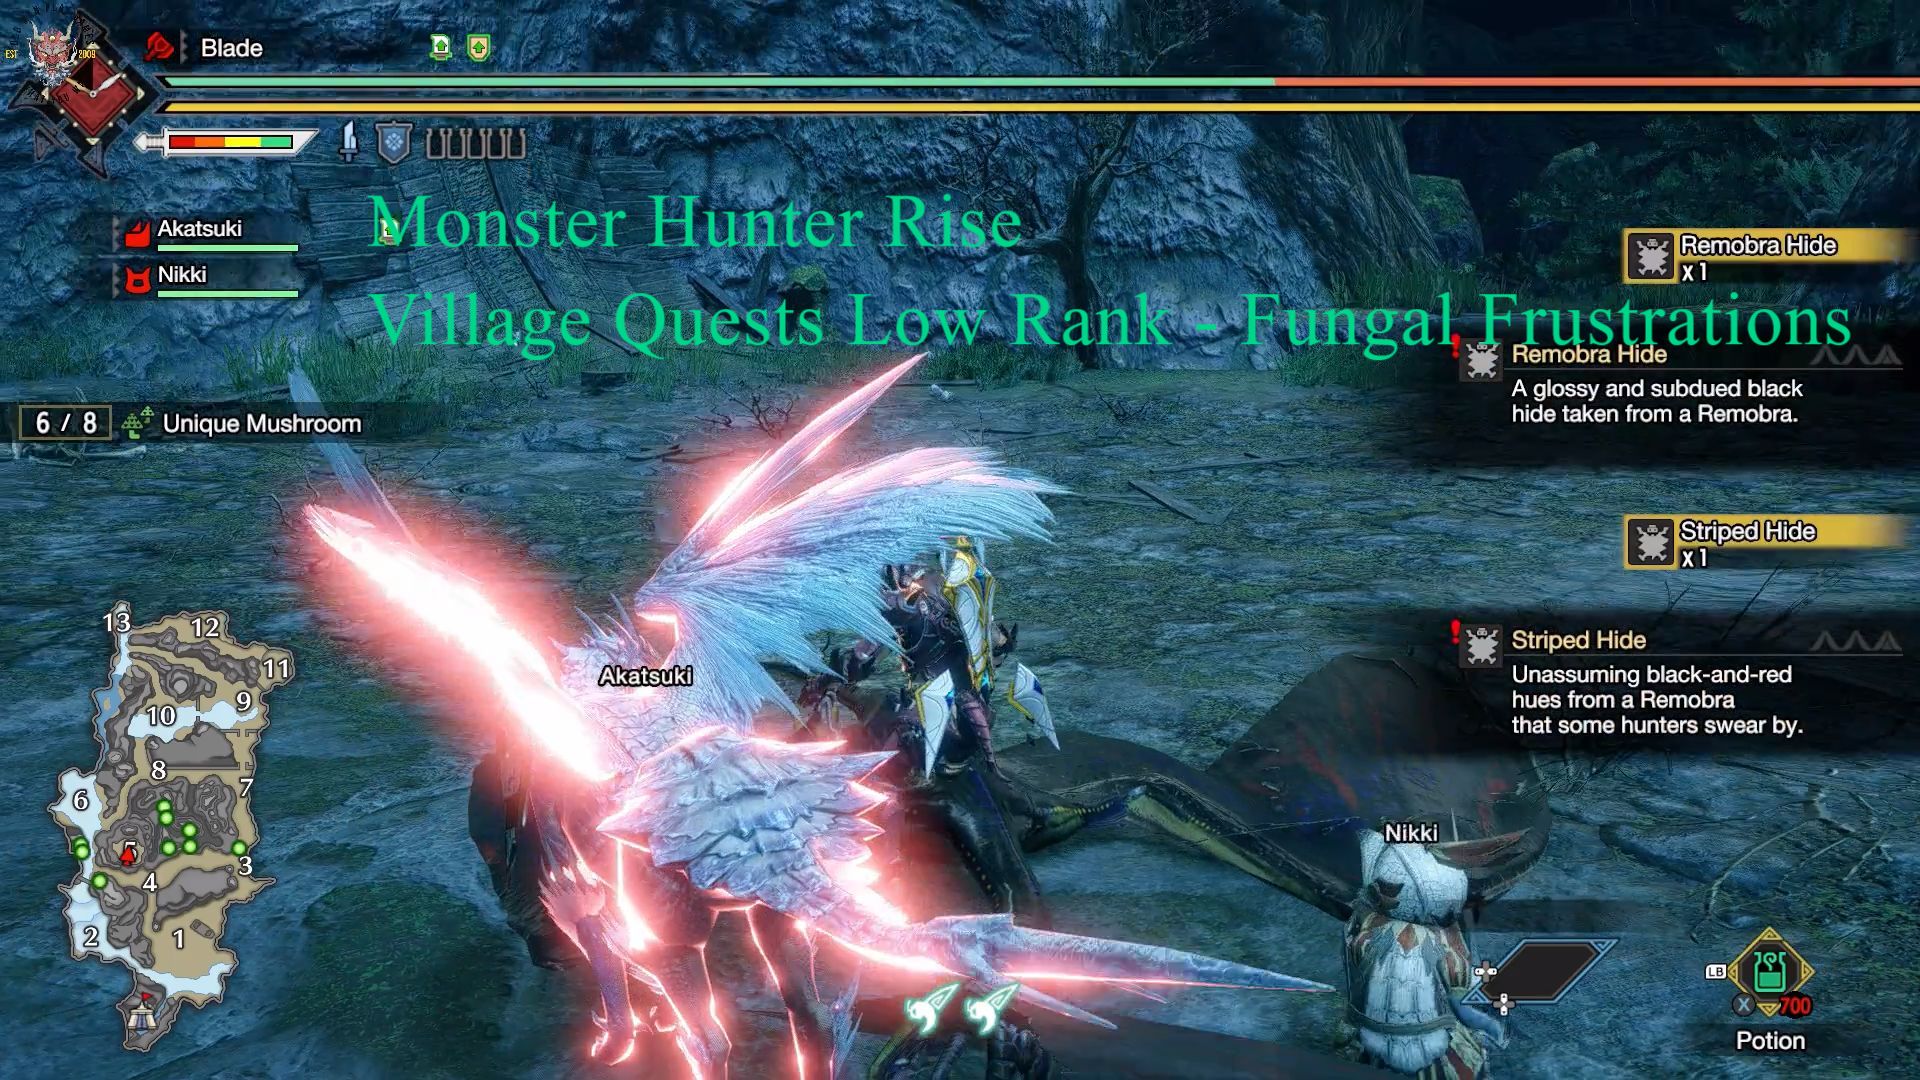 Monster Hunter Rise, Ryujinx Custom Build